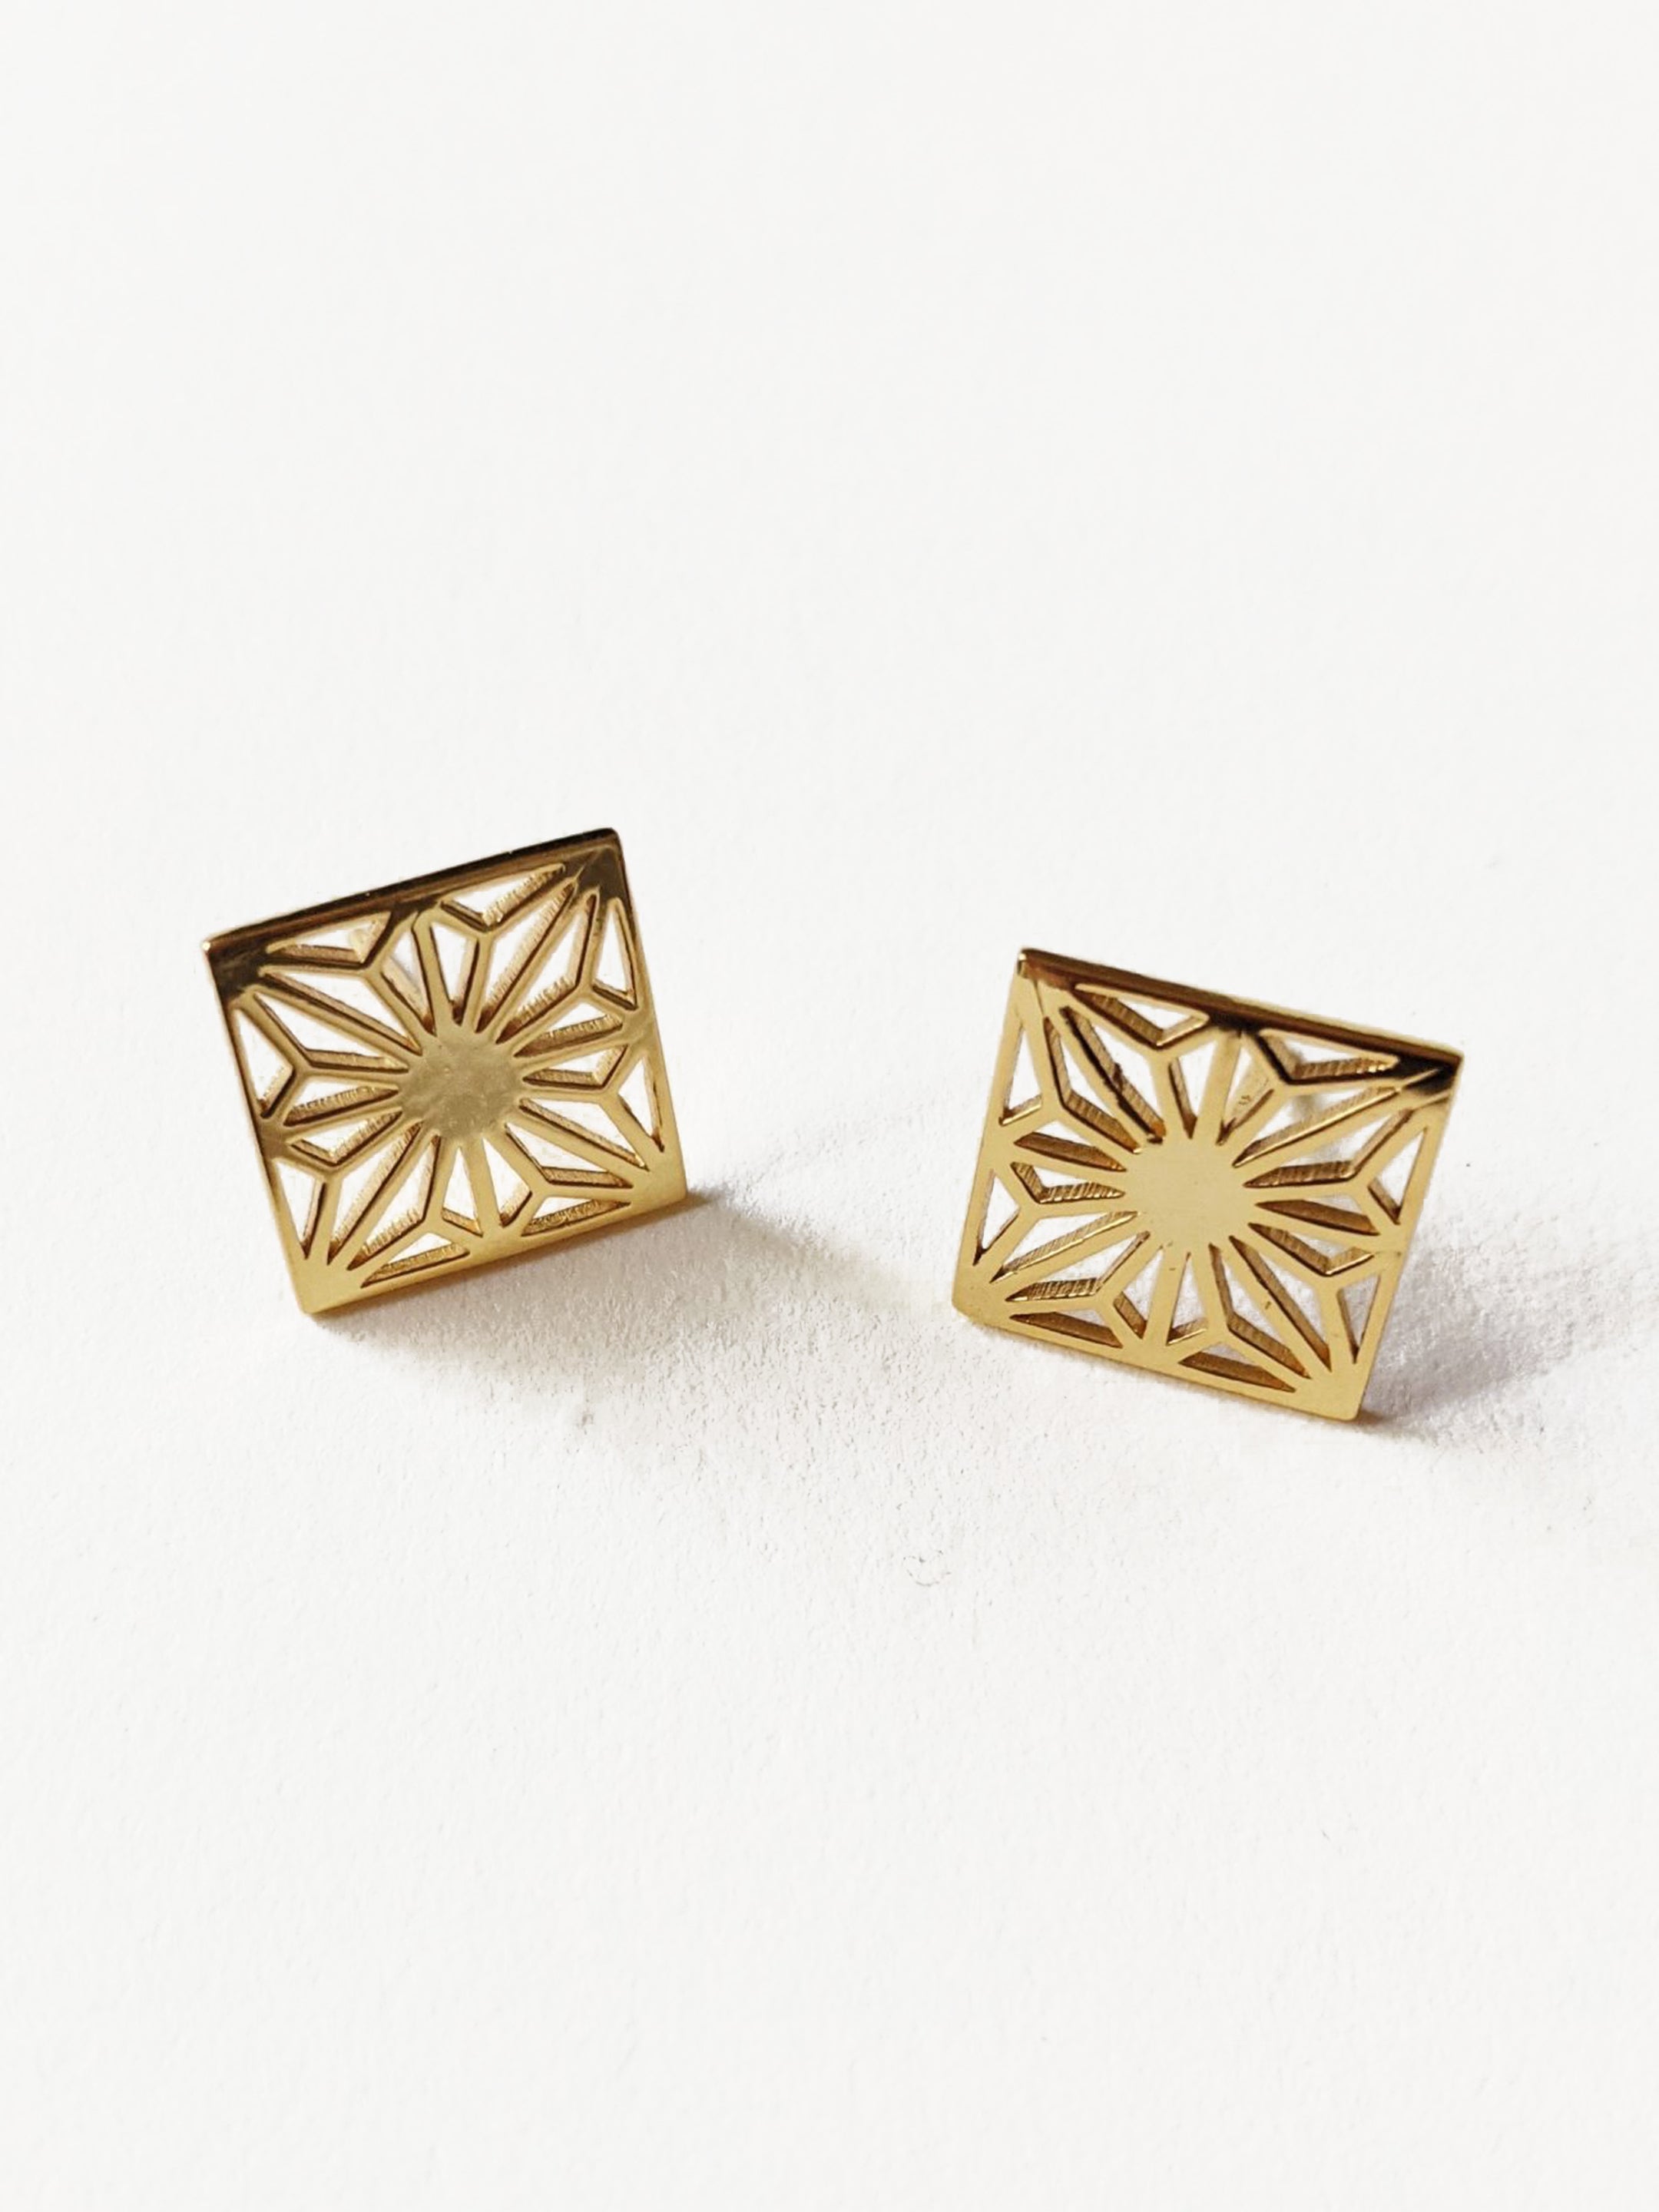 Buy 1 Gram Gold Jewellery Flower Design Stone Stud Earrings